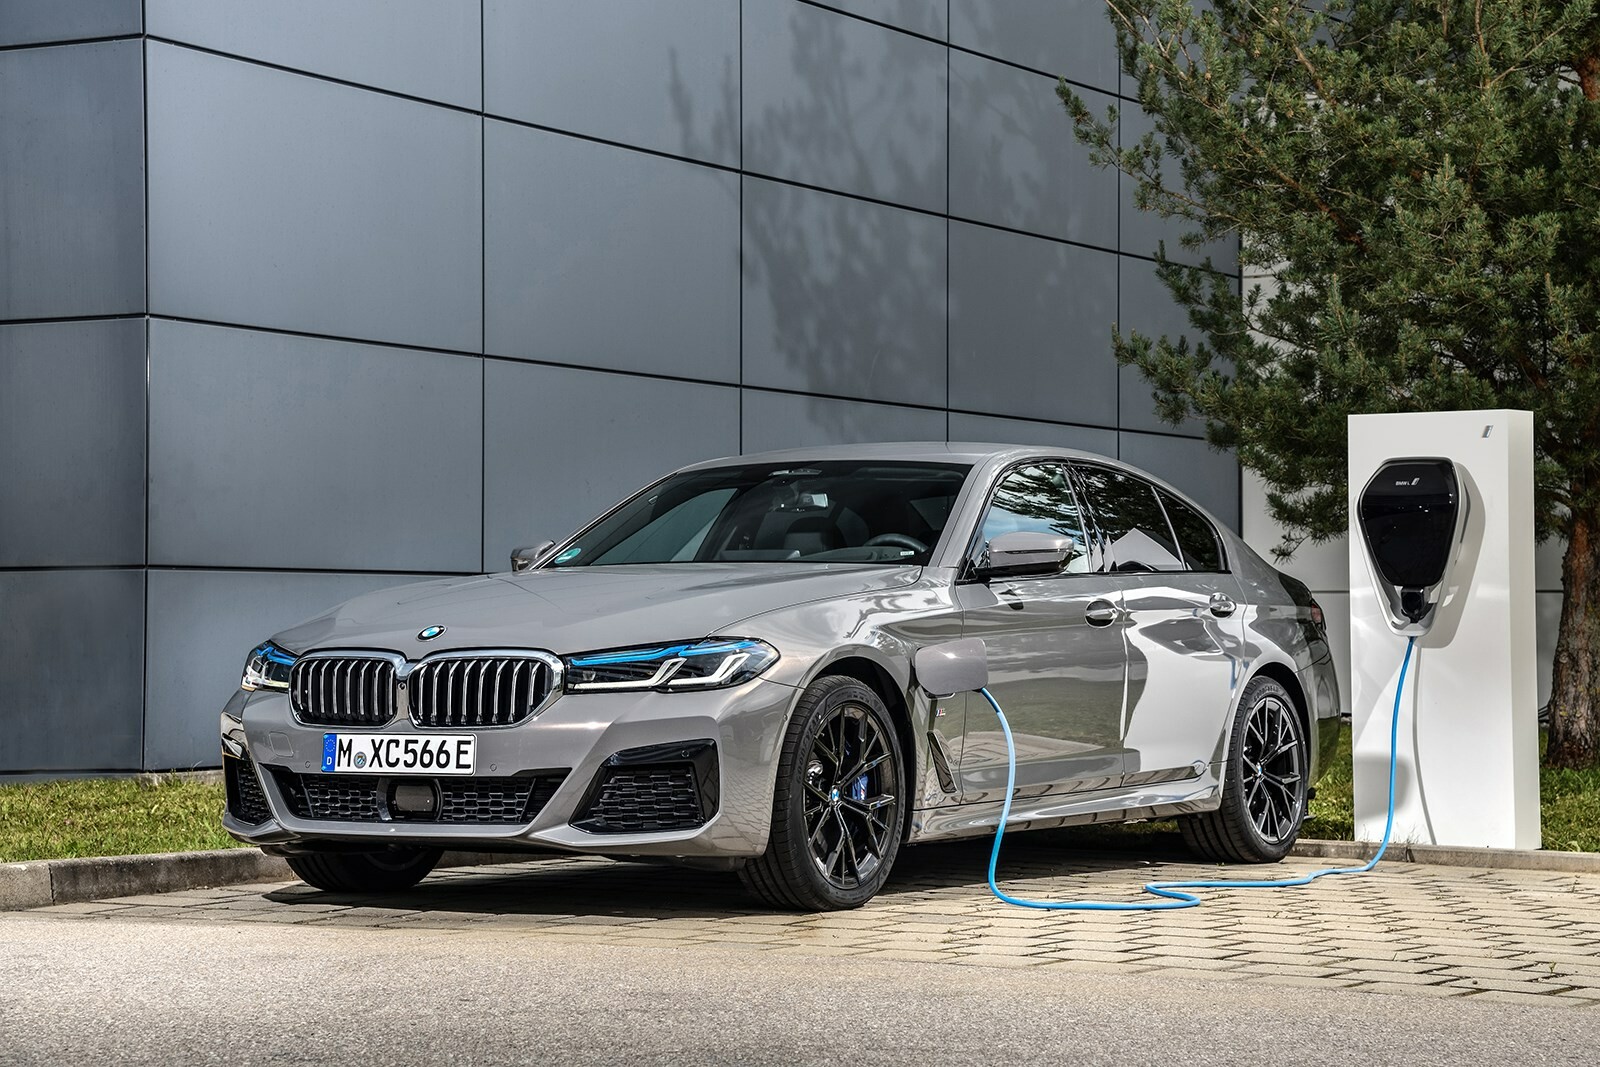 BMWが5シリーズのPHVにハイパワーな「545e」を追加。最高出力394hp、EV航続距離57km